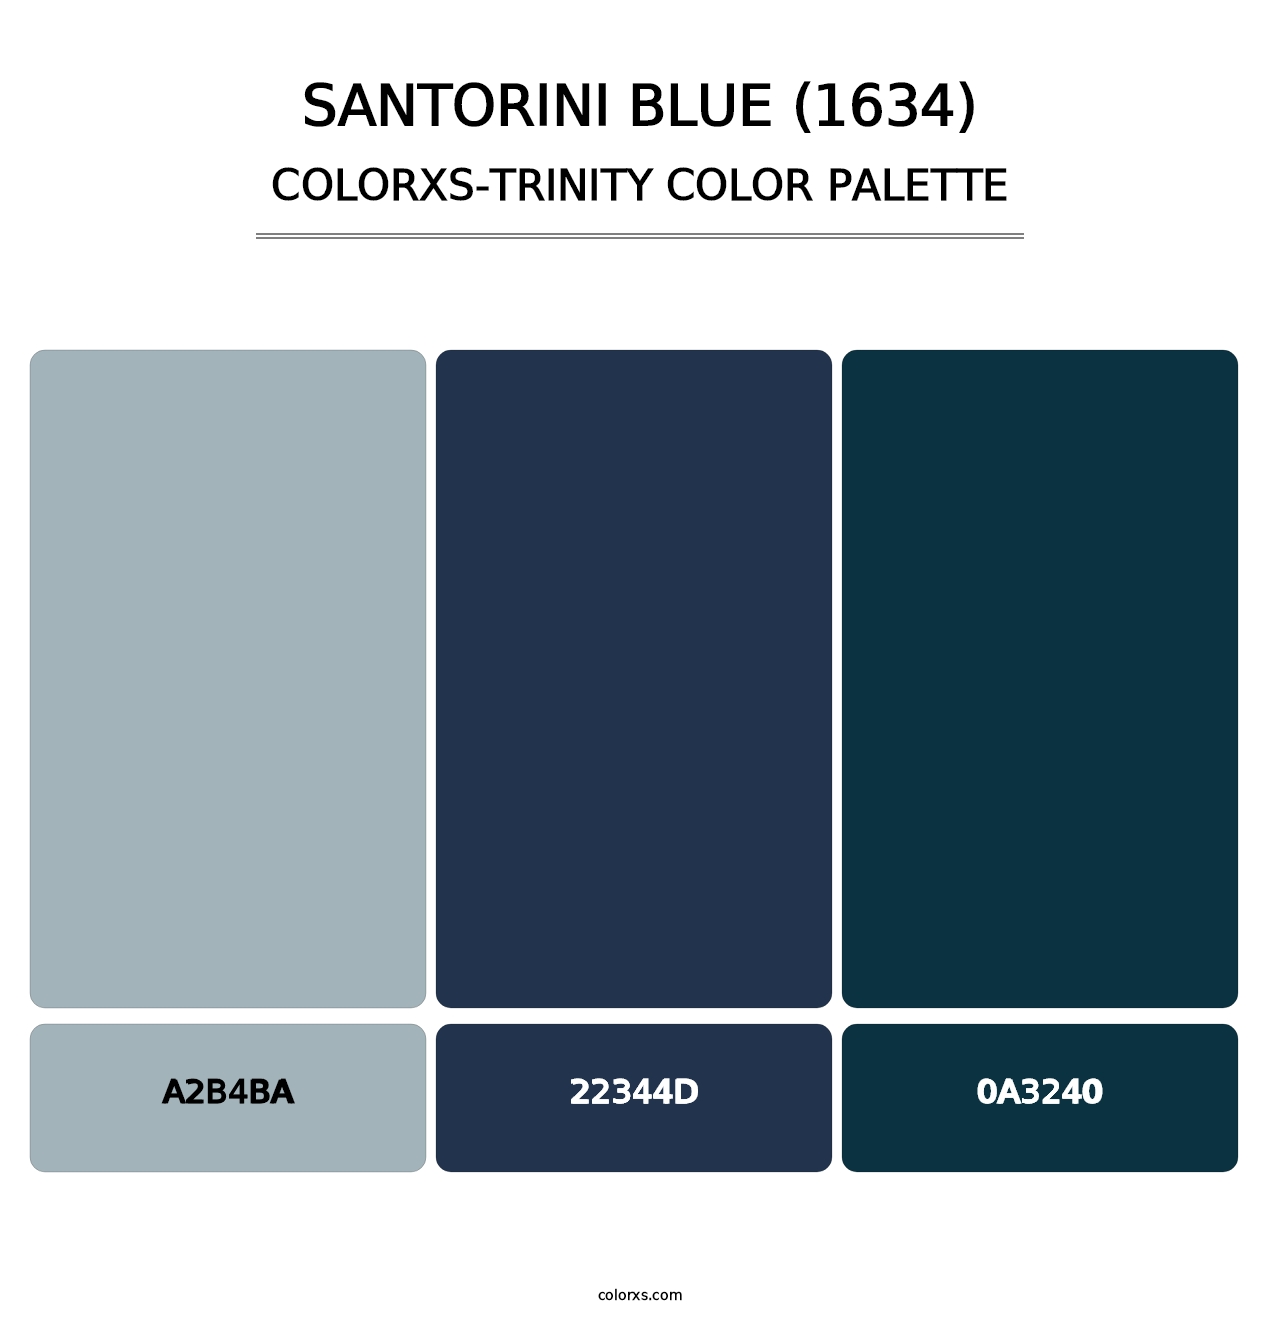 Santorini Blue (1634) - Colorxs Trinity Palette